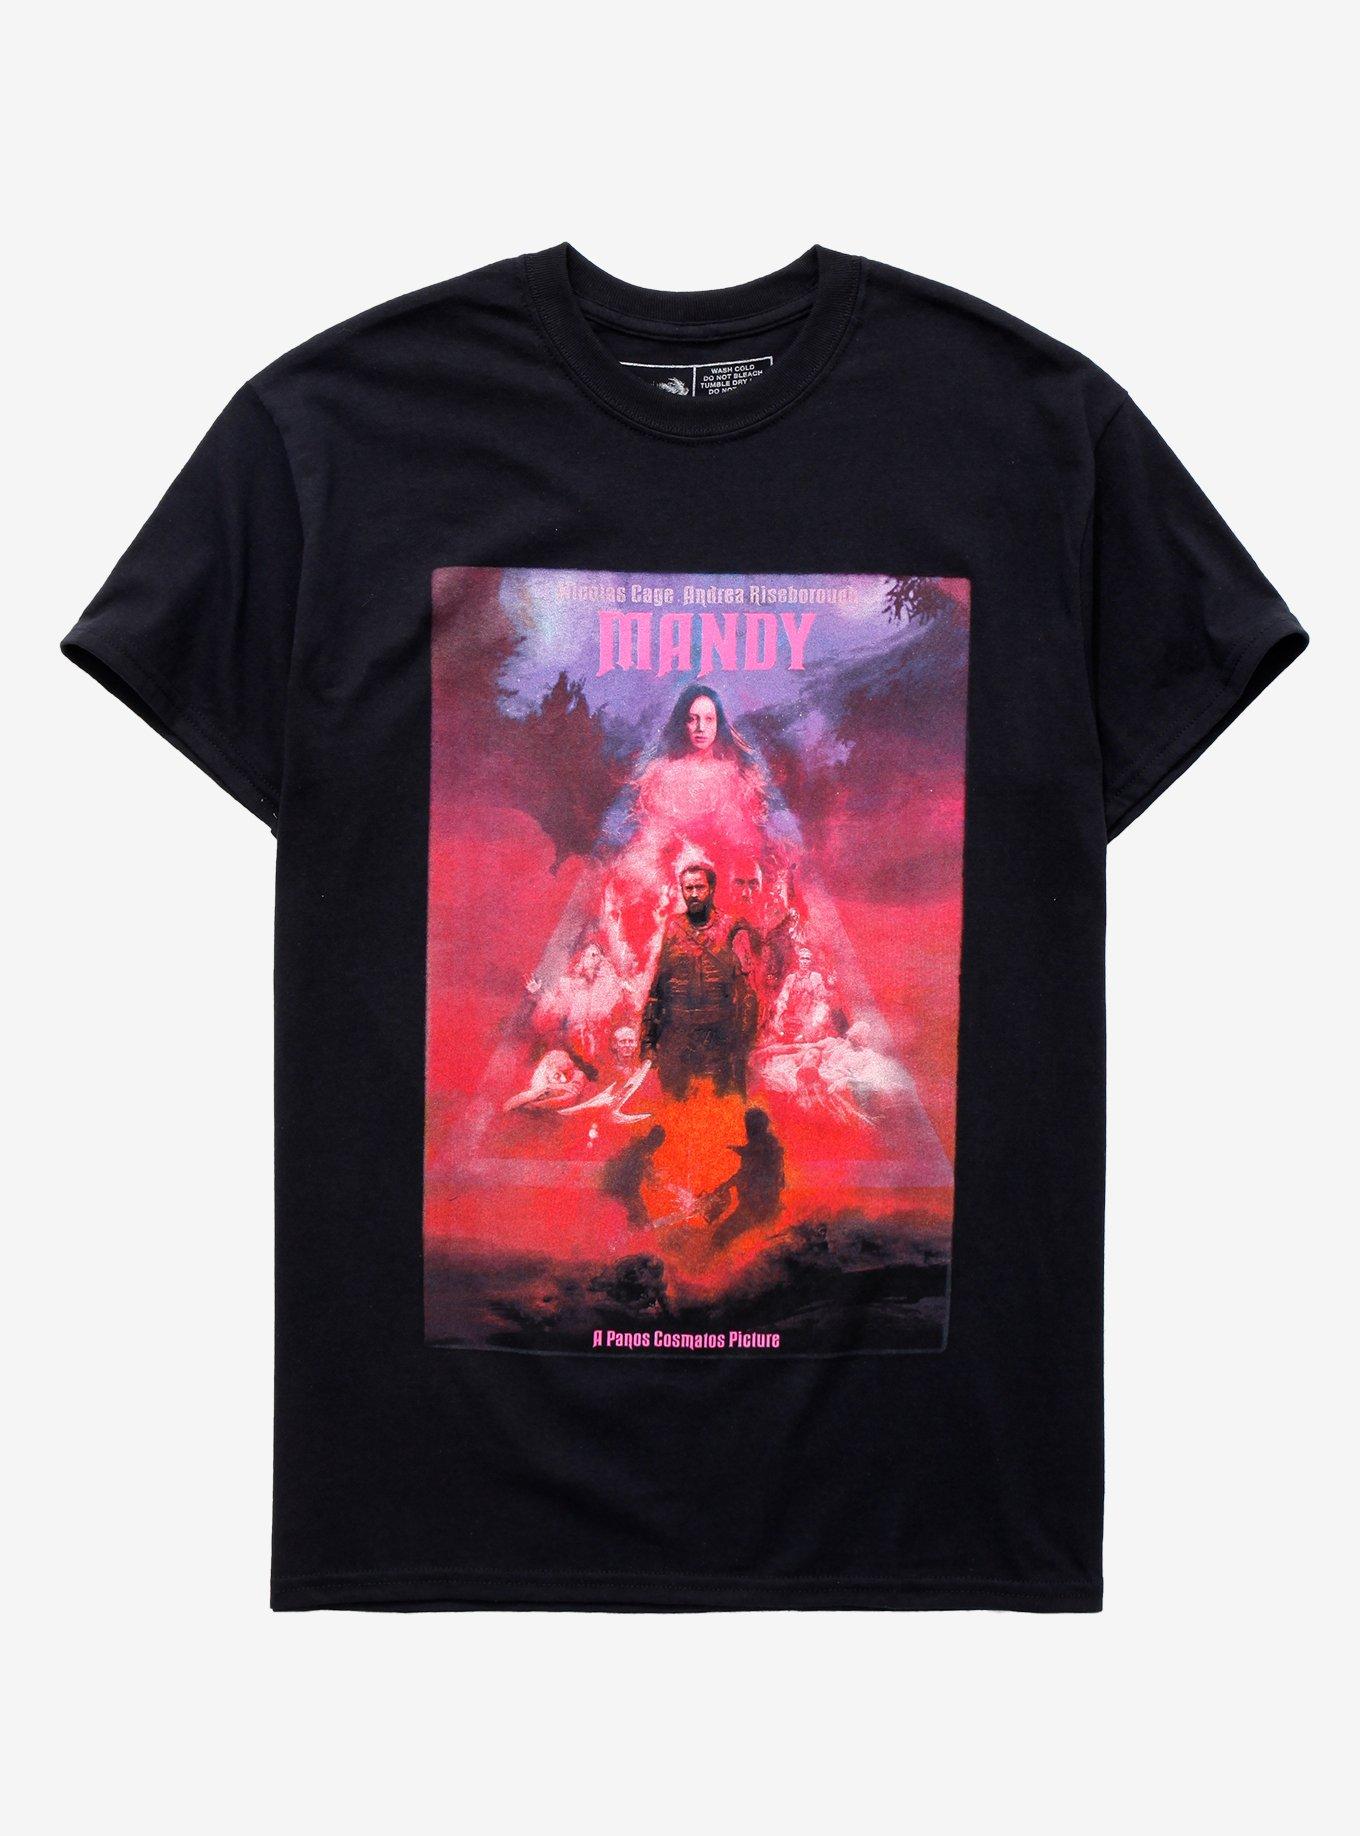 Mandy Poster T-Shirt | Hot Topic